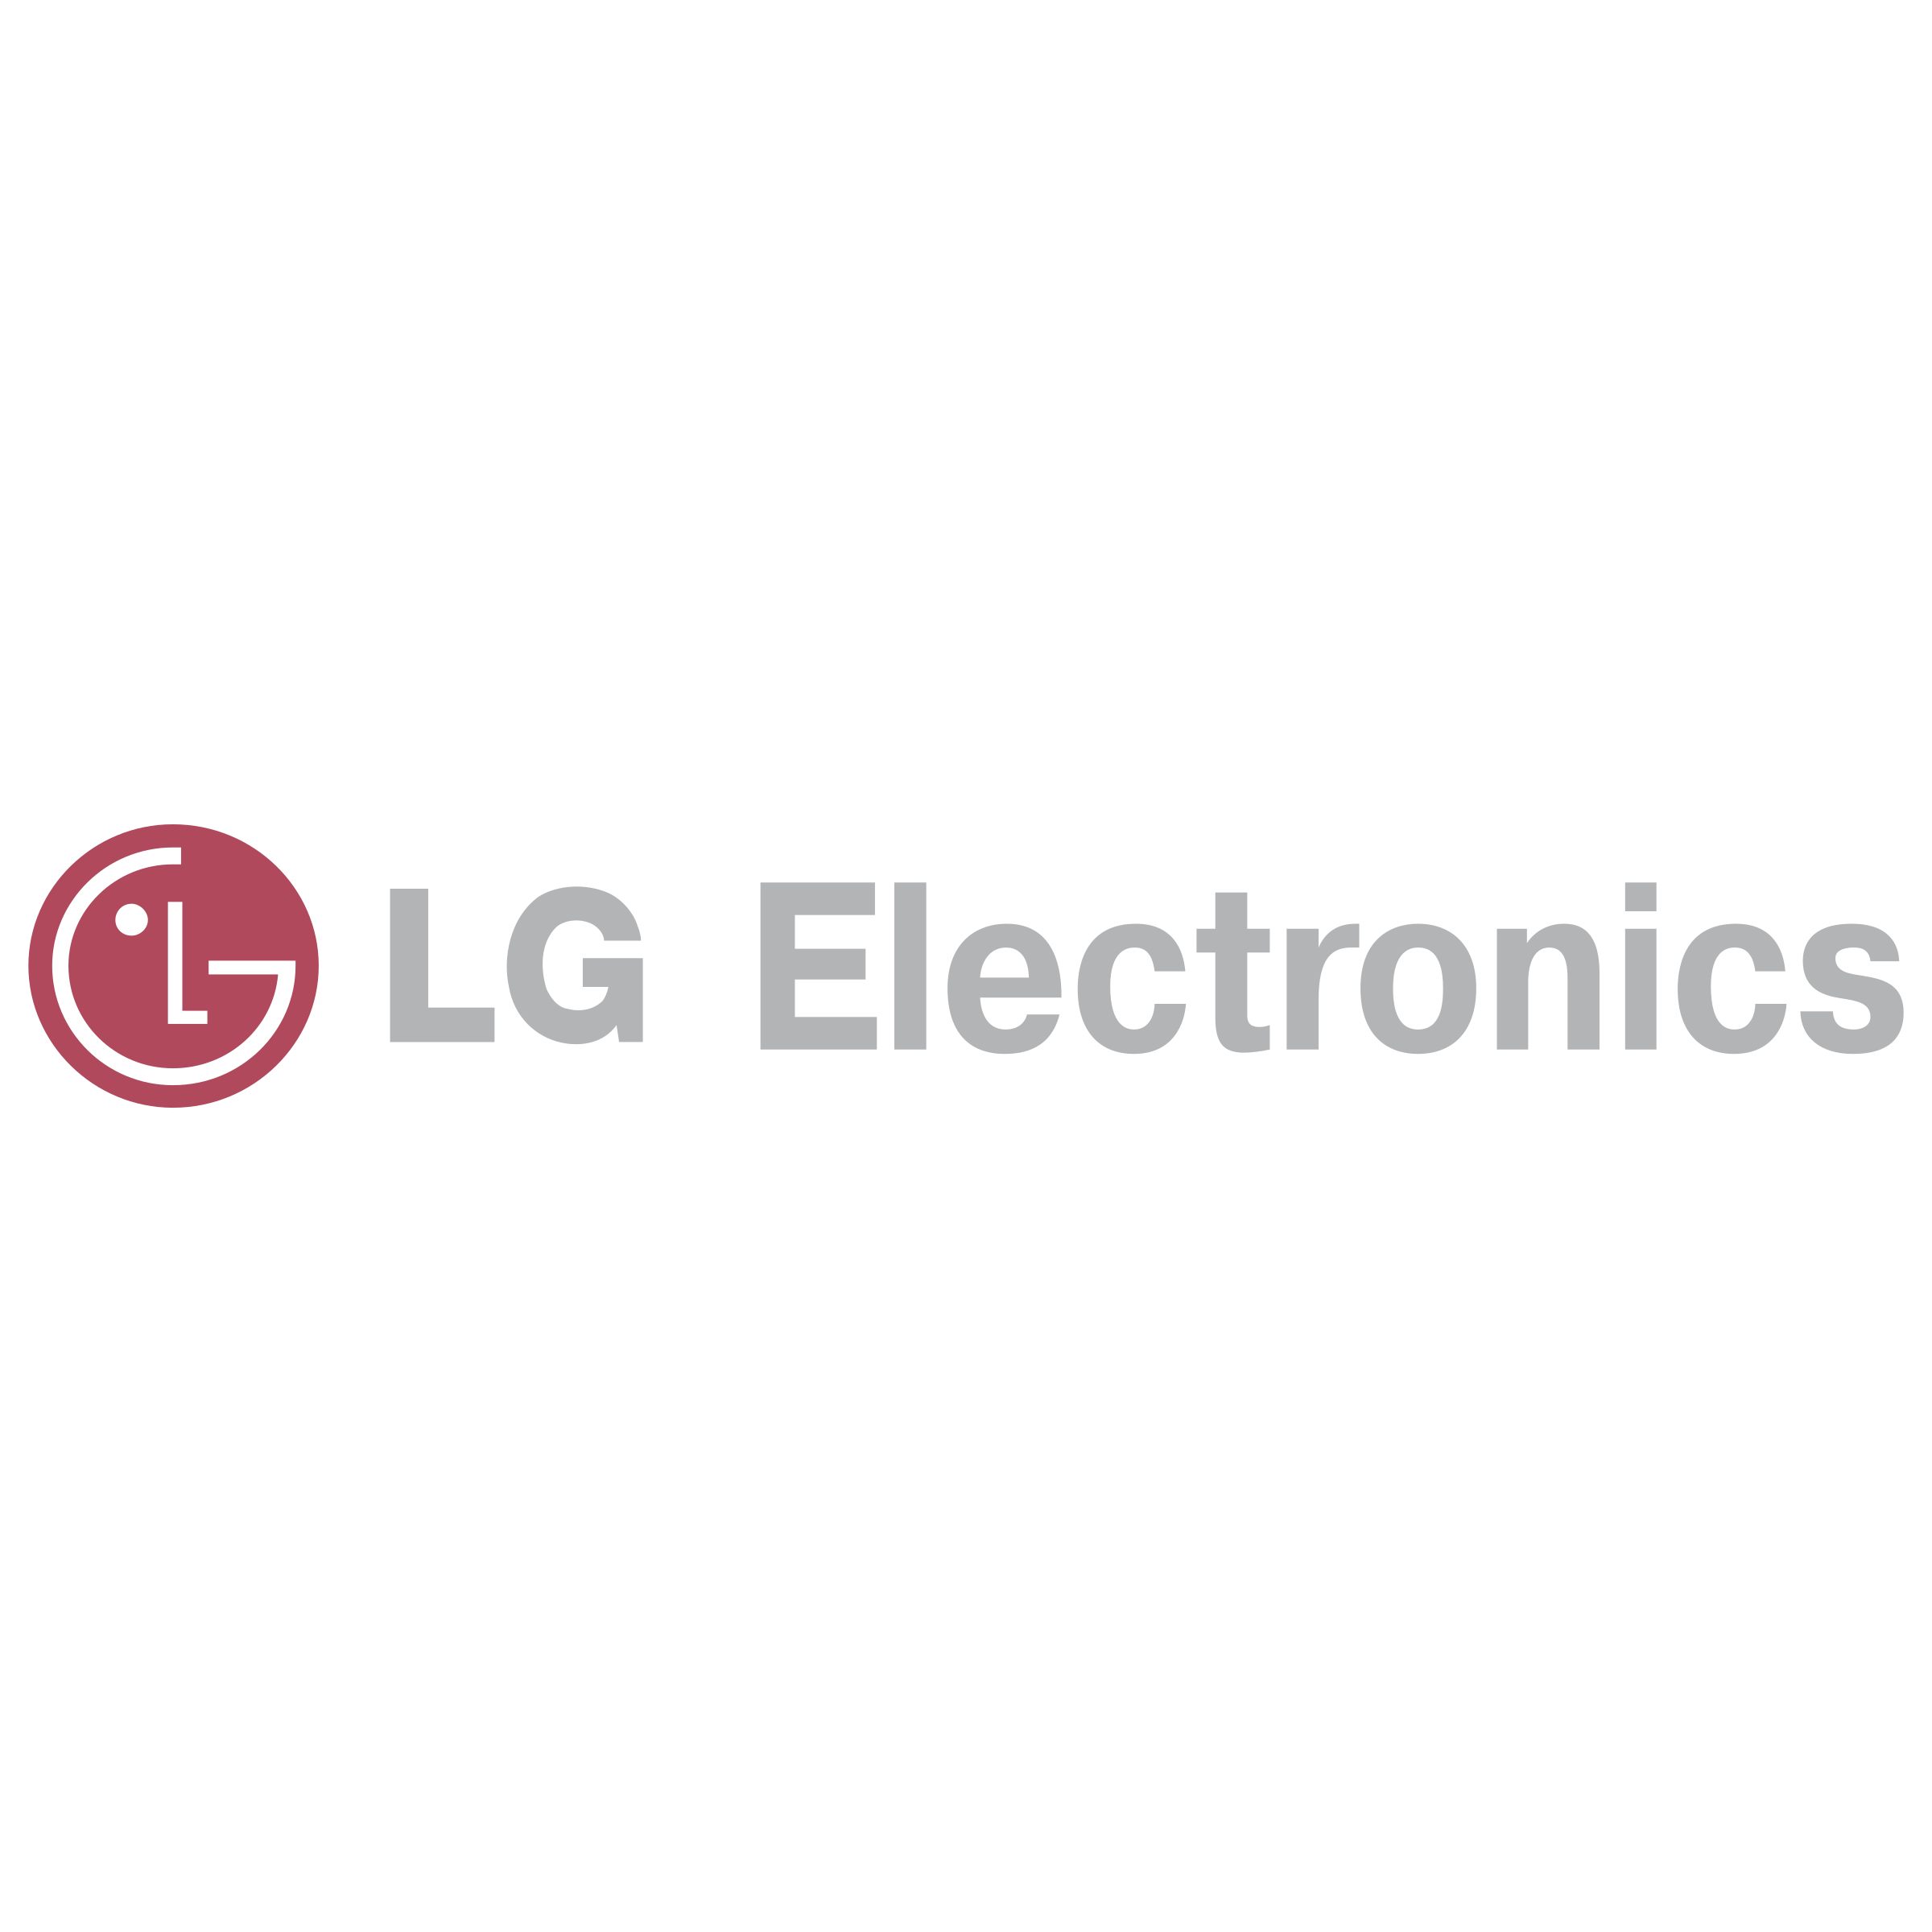 LG Logo PNG Images HD